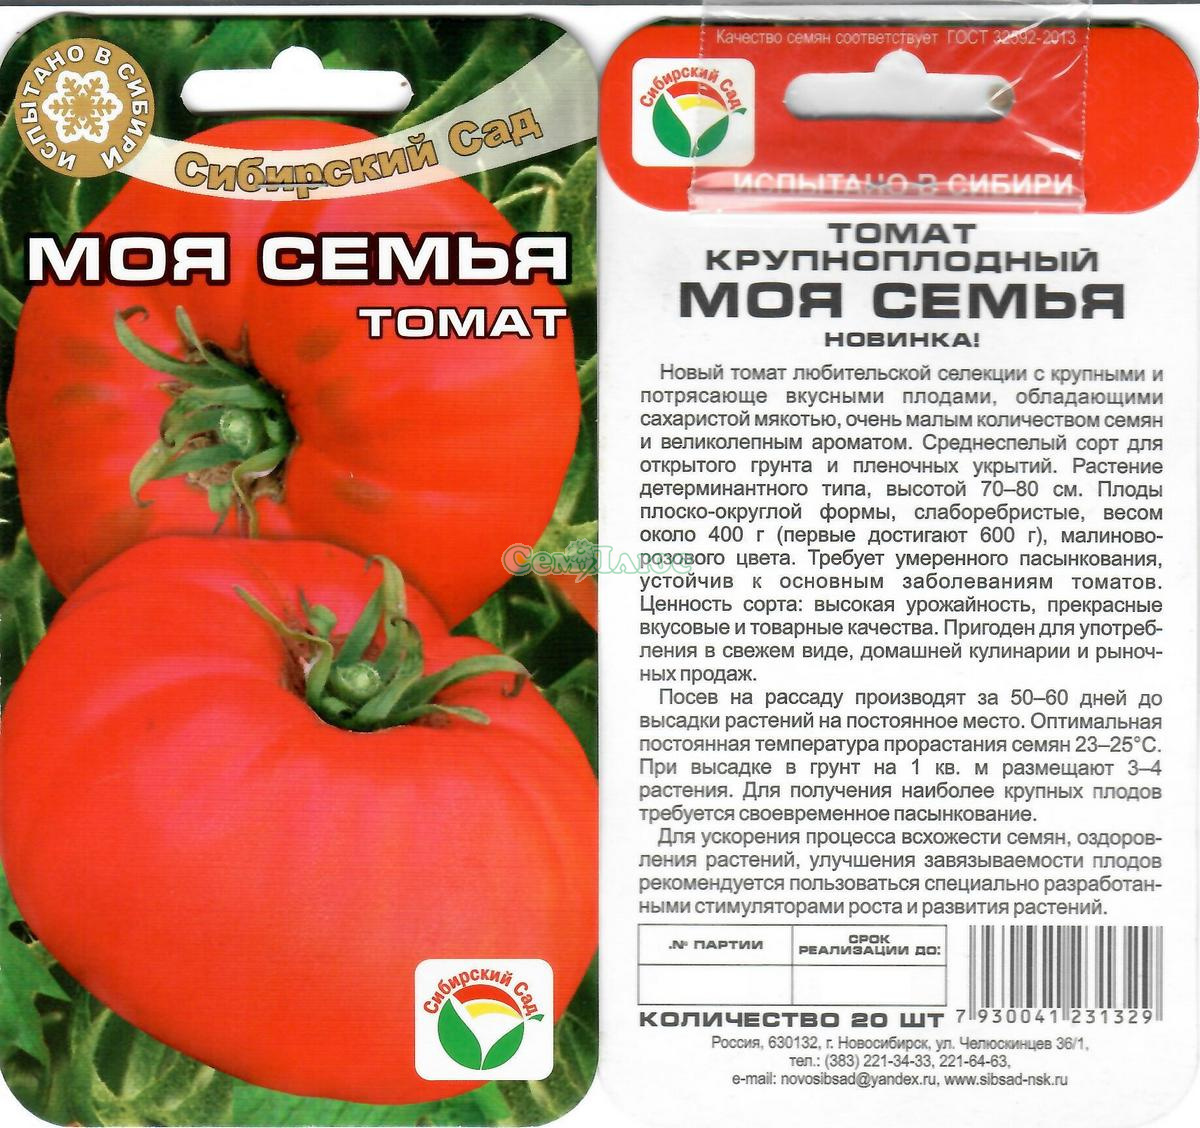 Описание томата Работяга и агротехника выращивания сорта